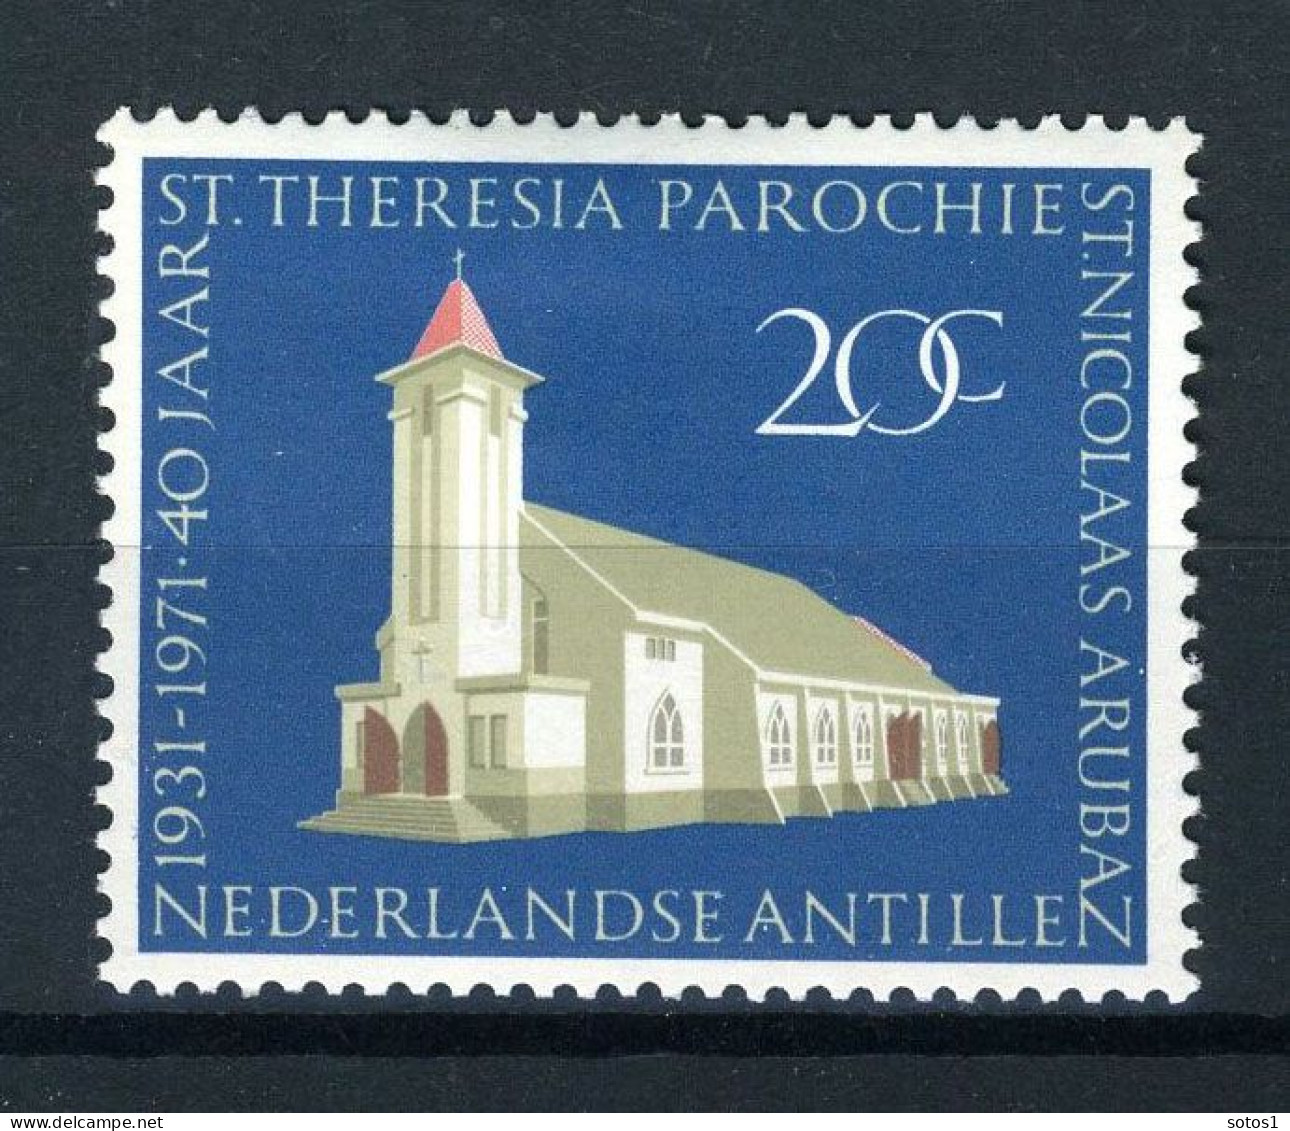 NL. ANTILLEN 434 MH 1971 - 40 Jaar St. Thomas Parochie Aruba. - Niederländische Antillen, Curaçao, Aruba